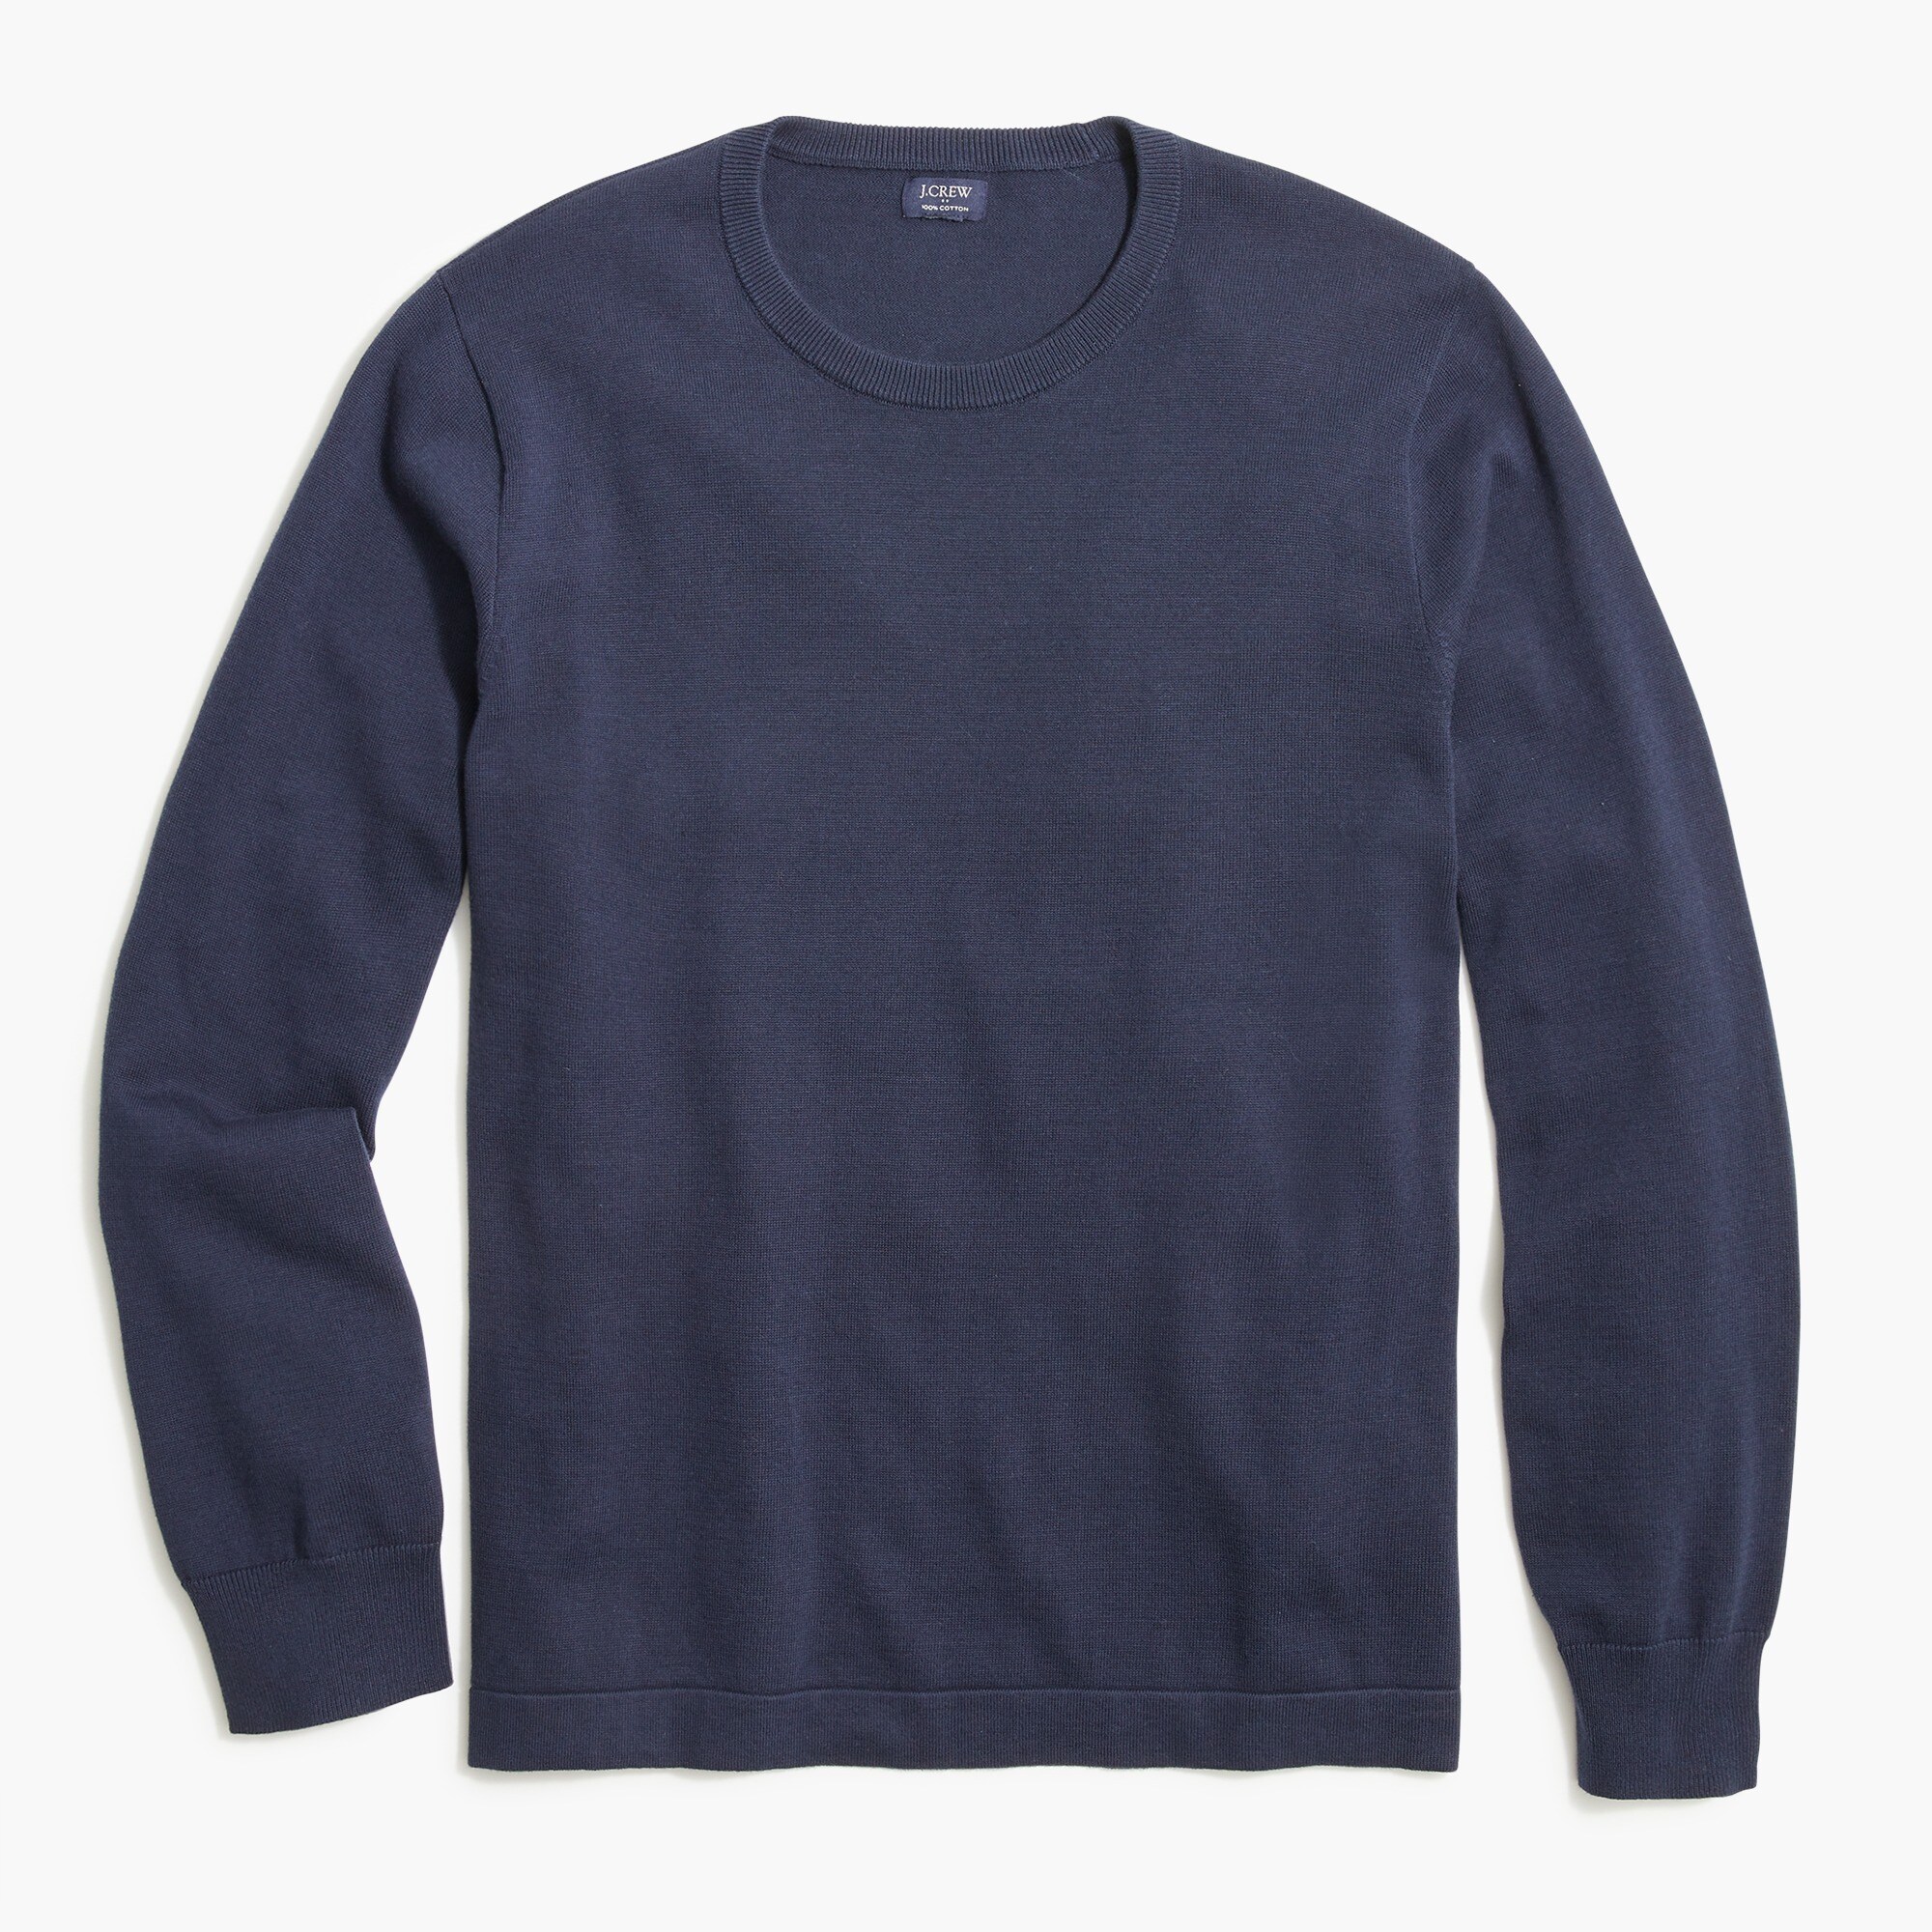  Cotton crewneck sweater-tee